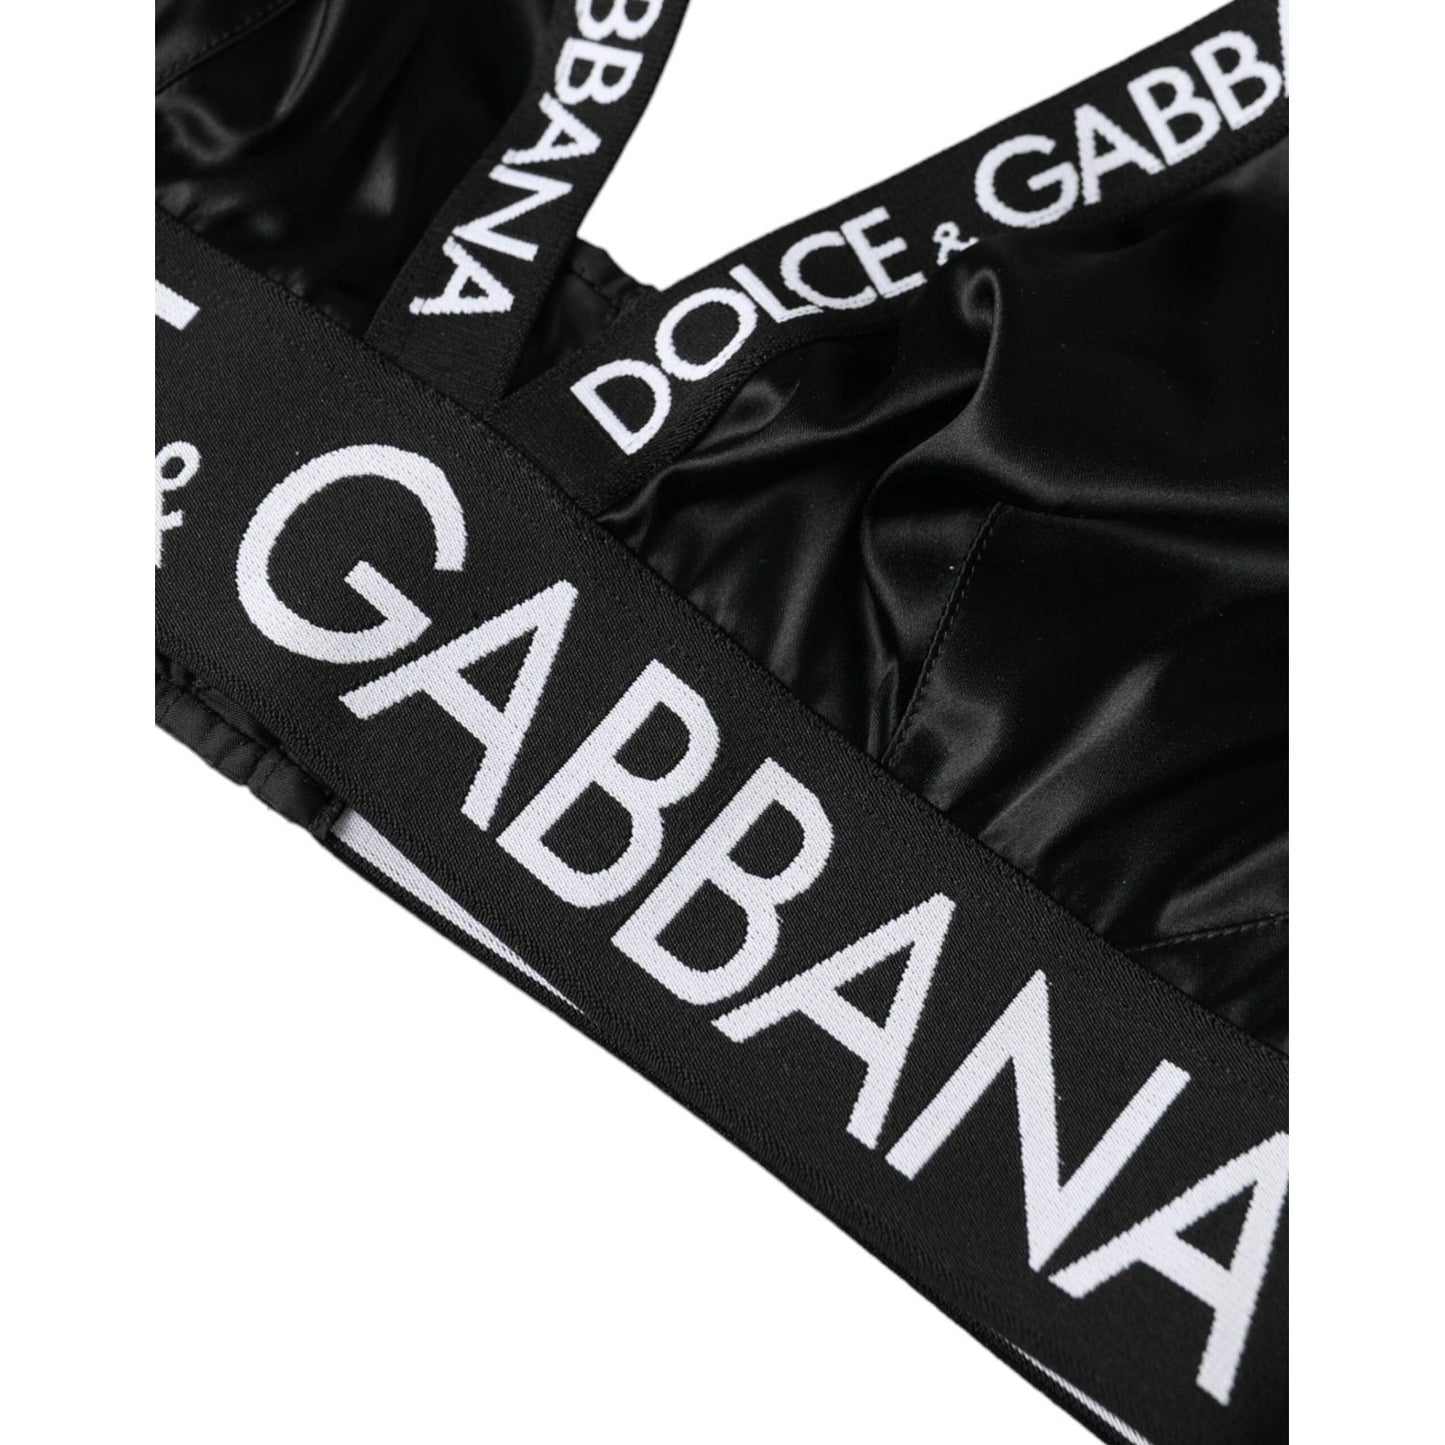 Dolce & Gabbana Black White Logo Print Sports Women Bra Underwear black-white-logo-print-sports-women-bra-underwear